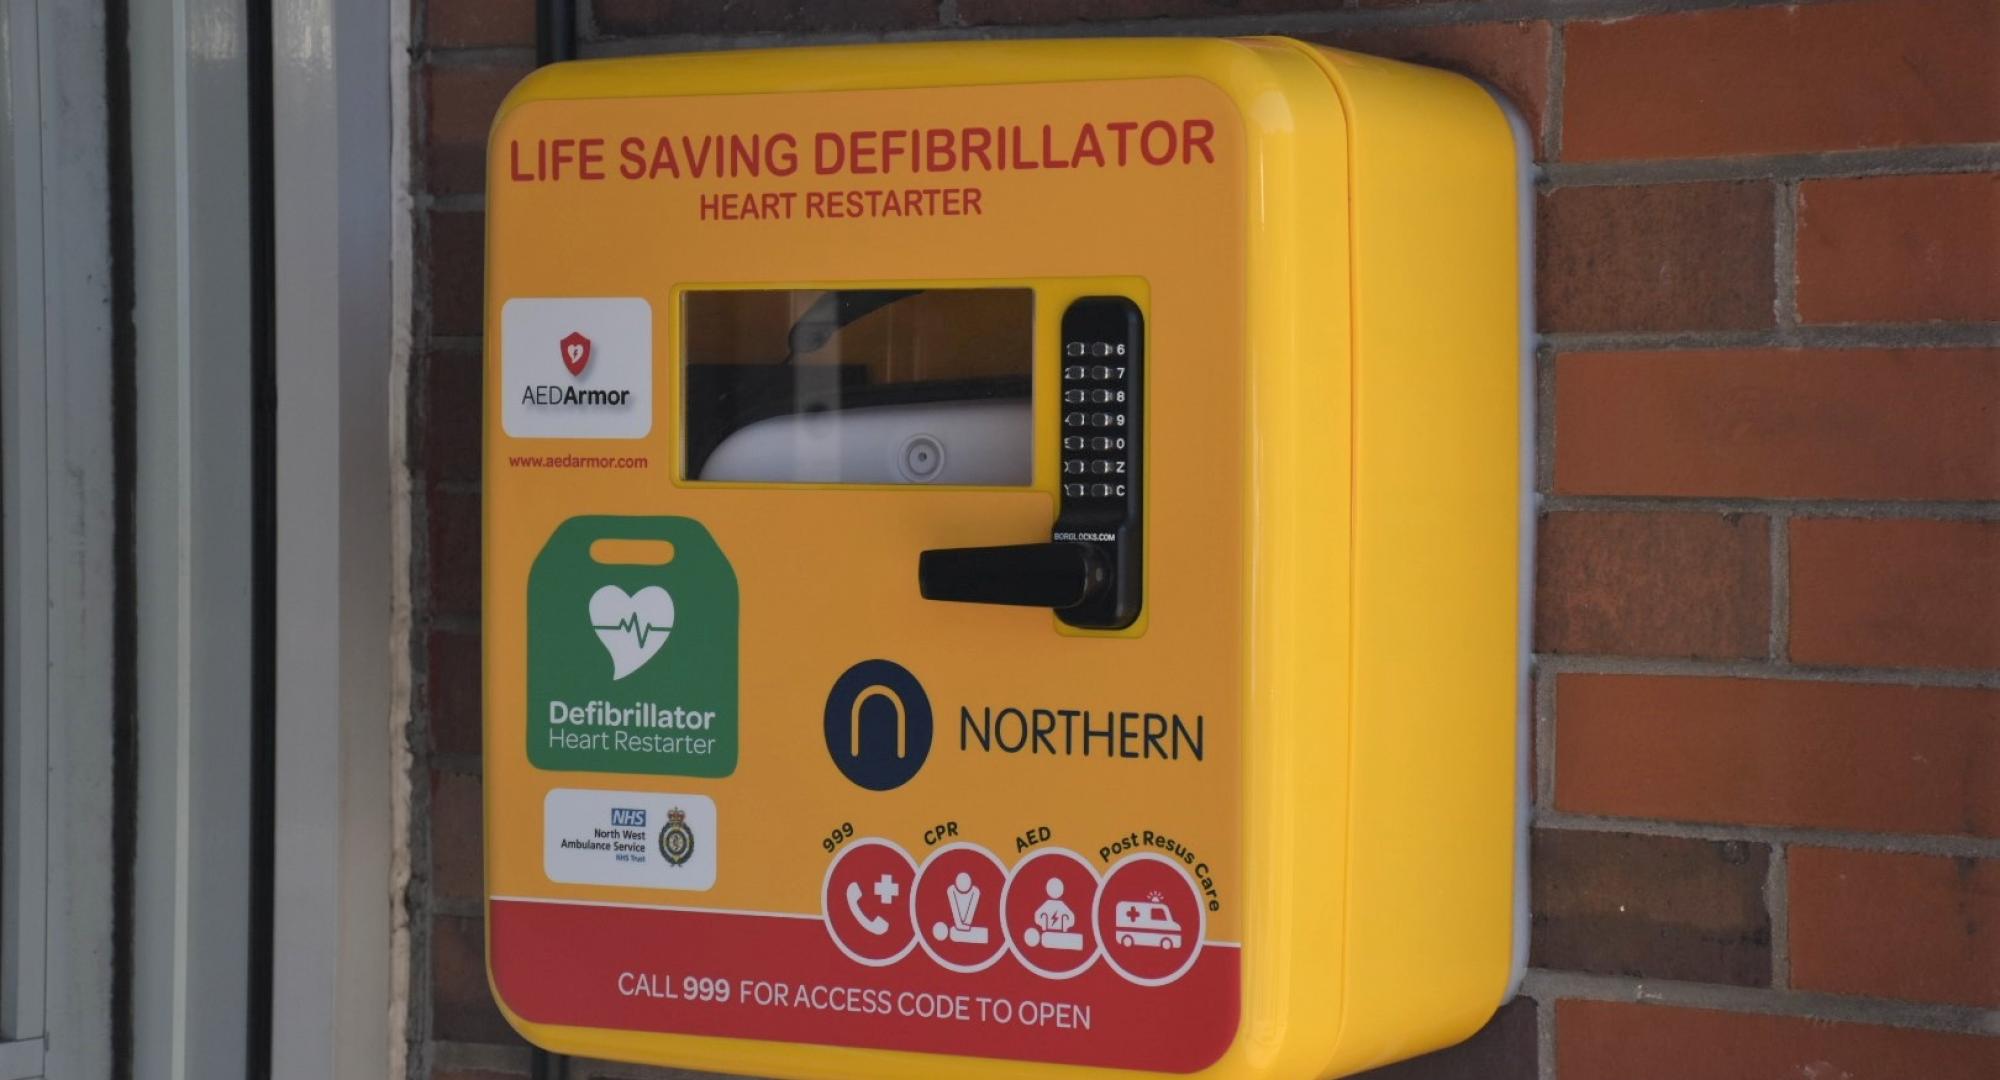 Defibrillator, via Northern 